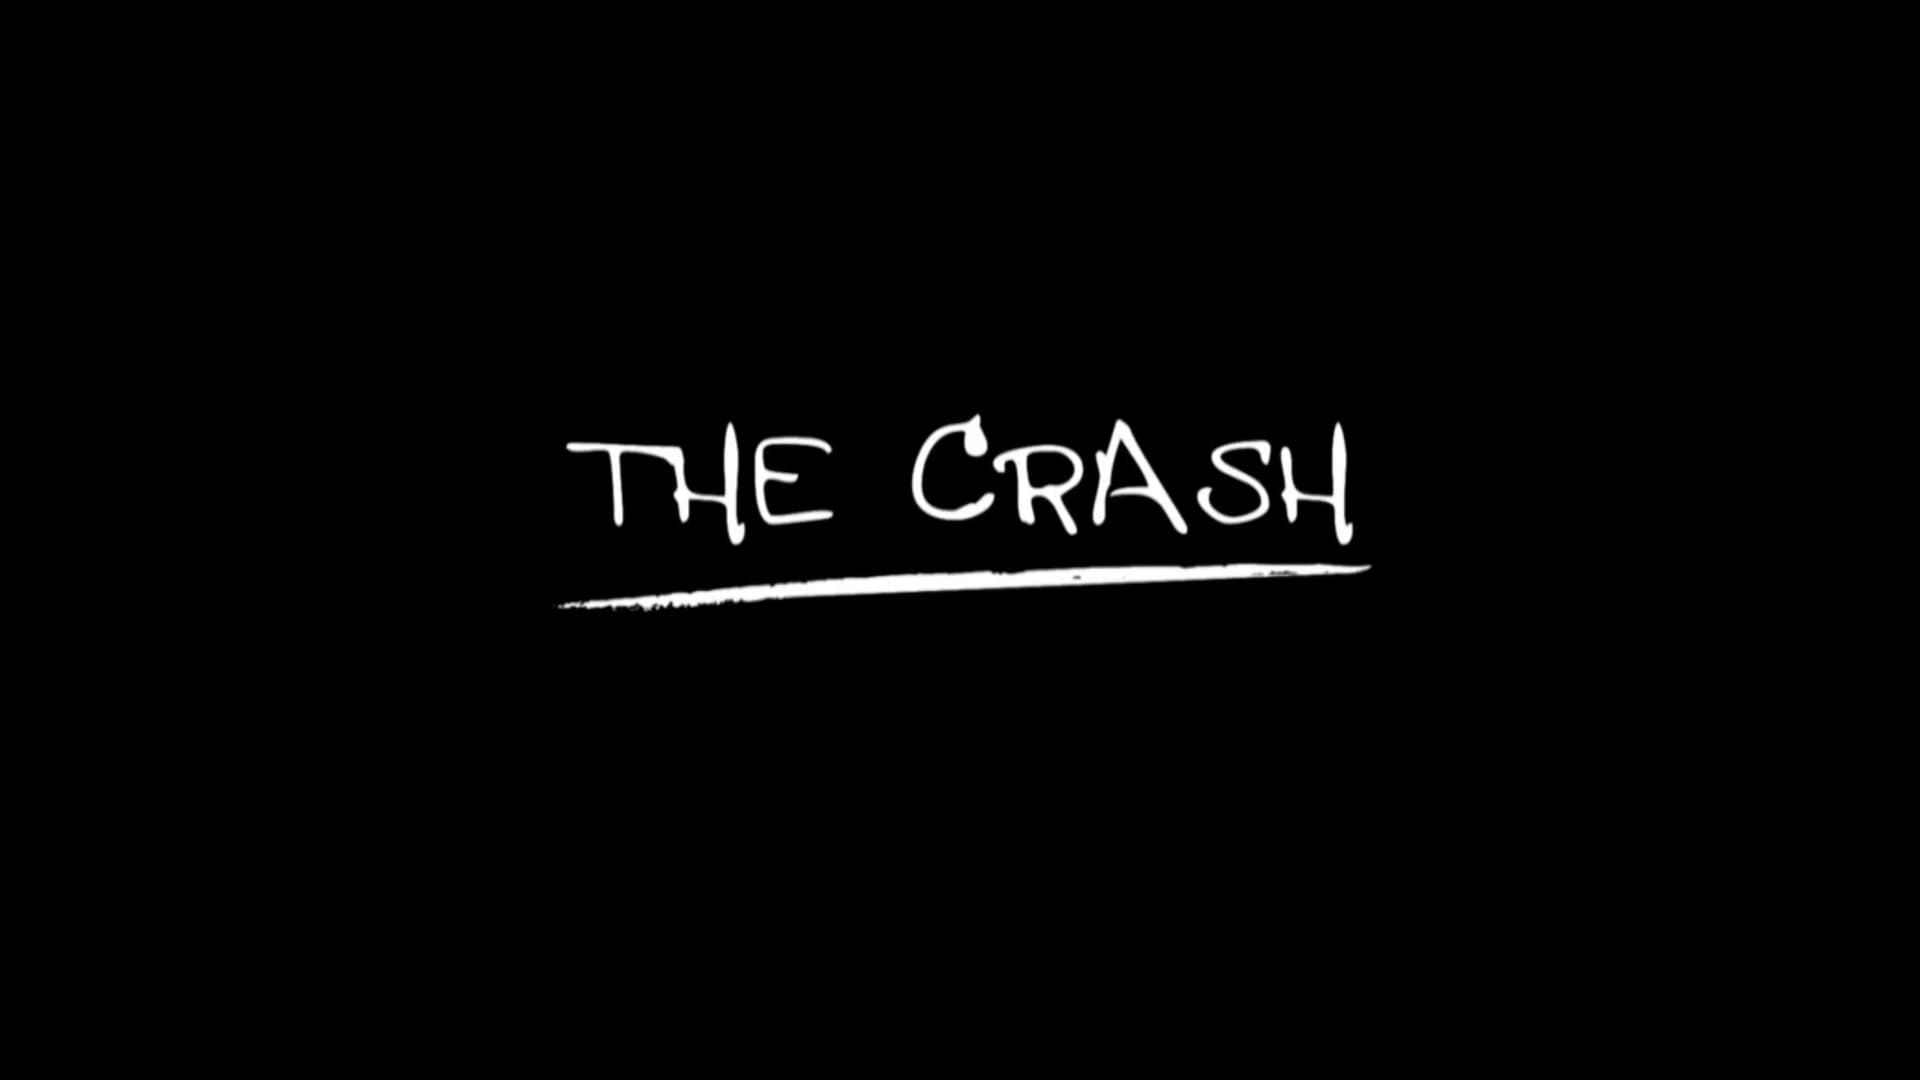 The Crash background